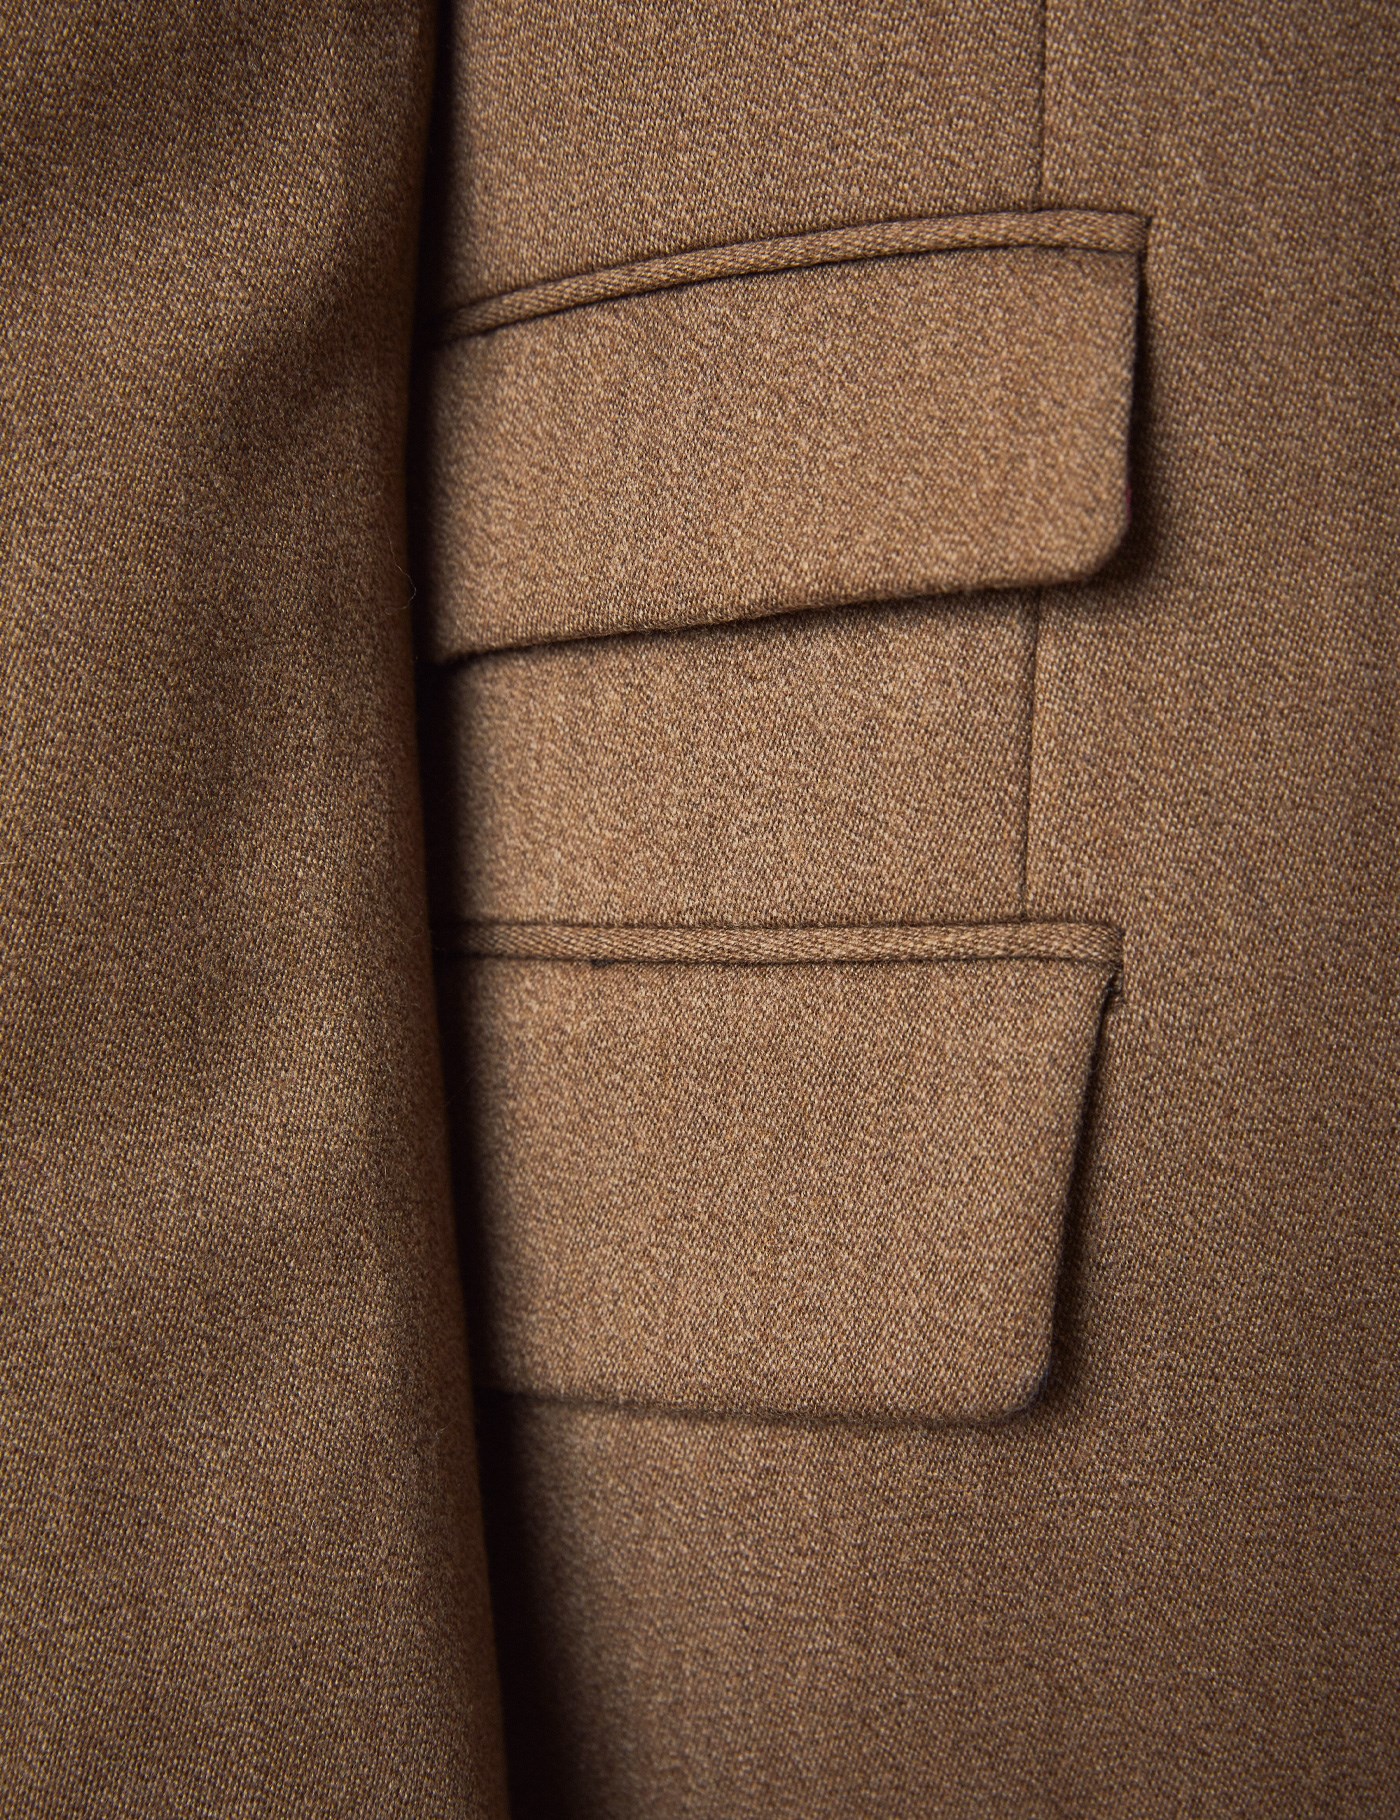 Men's Camel Covert Coat - 100% Wool | Hawes & Curtis